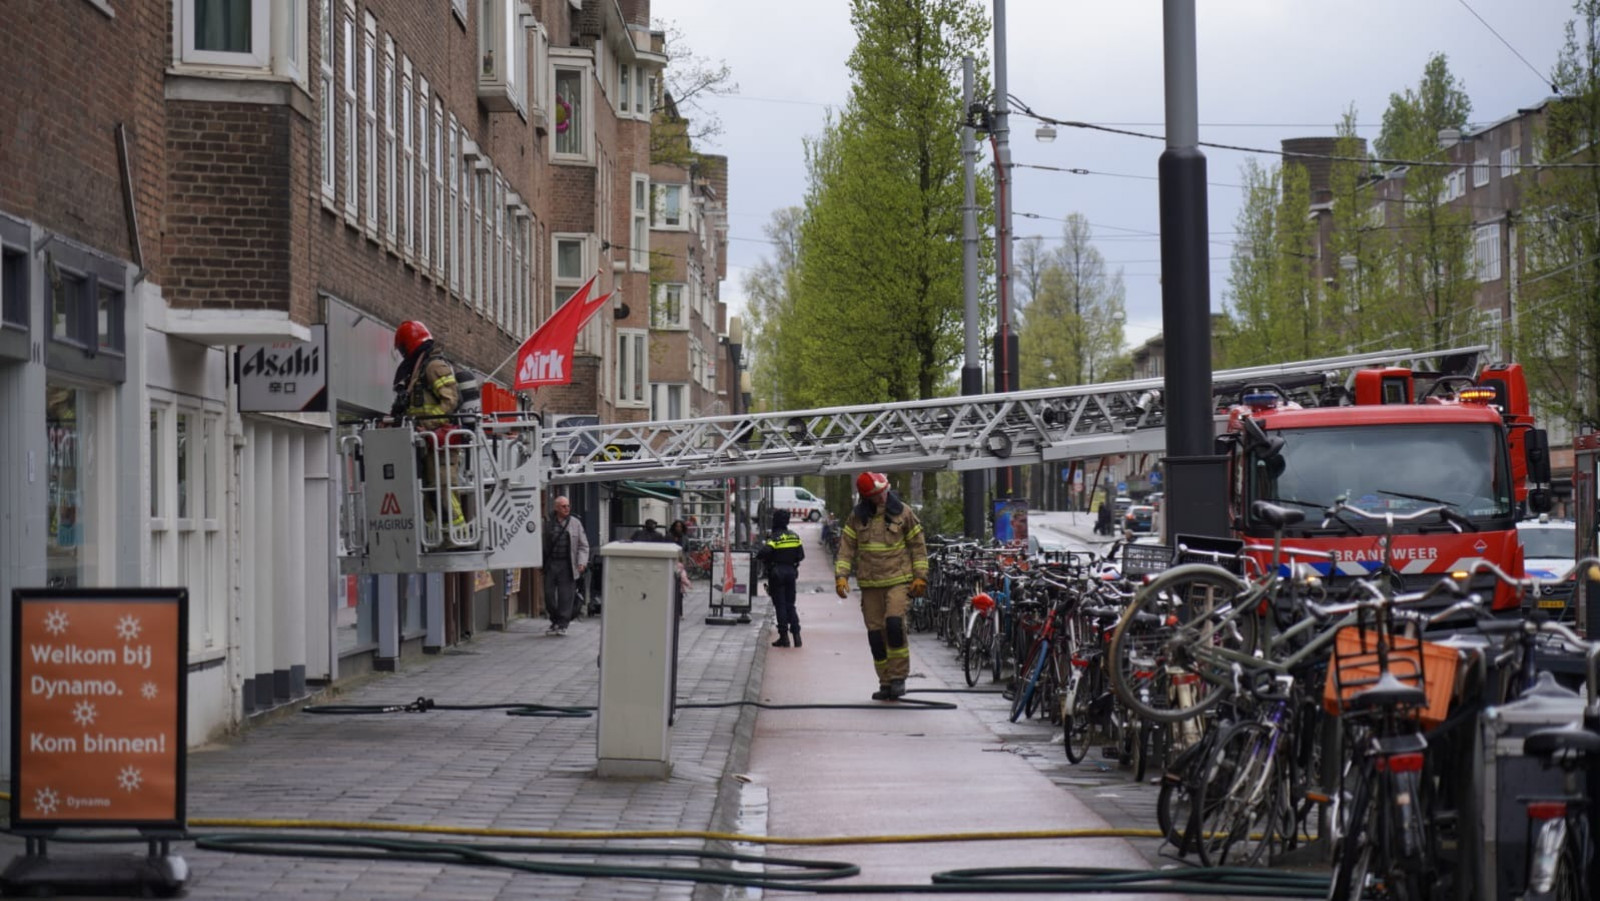 Brand Rijnstraat Zuid 